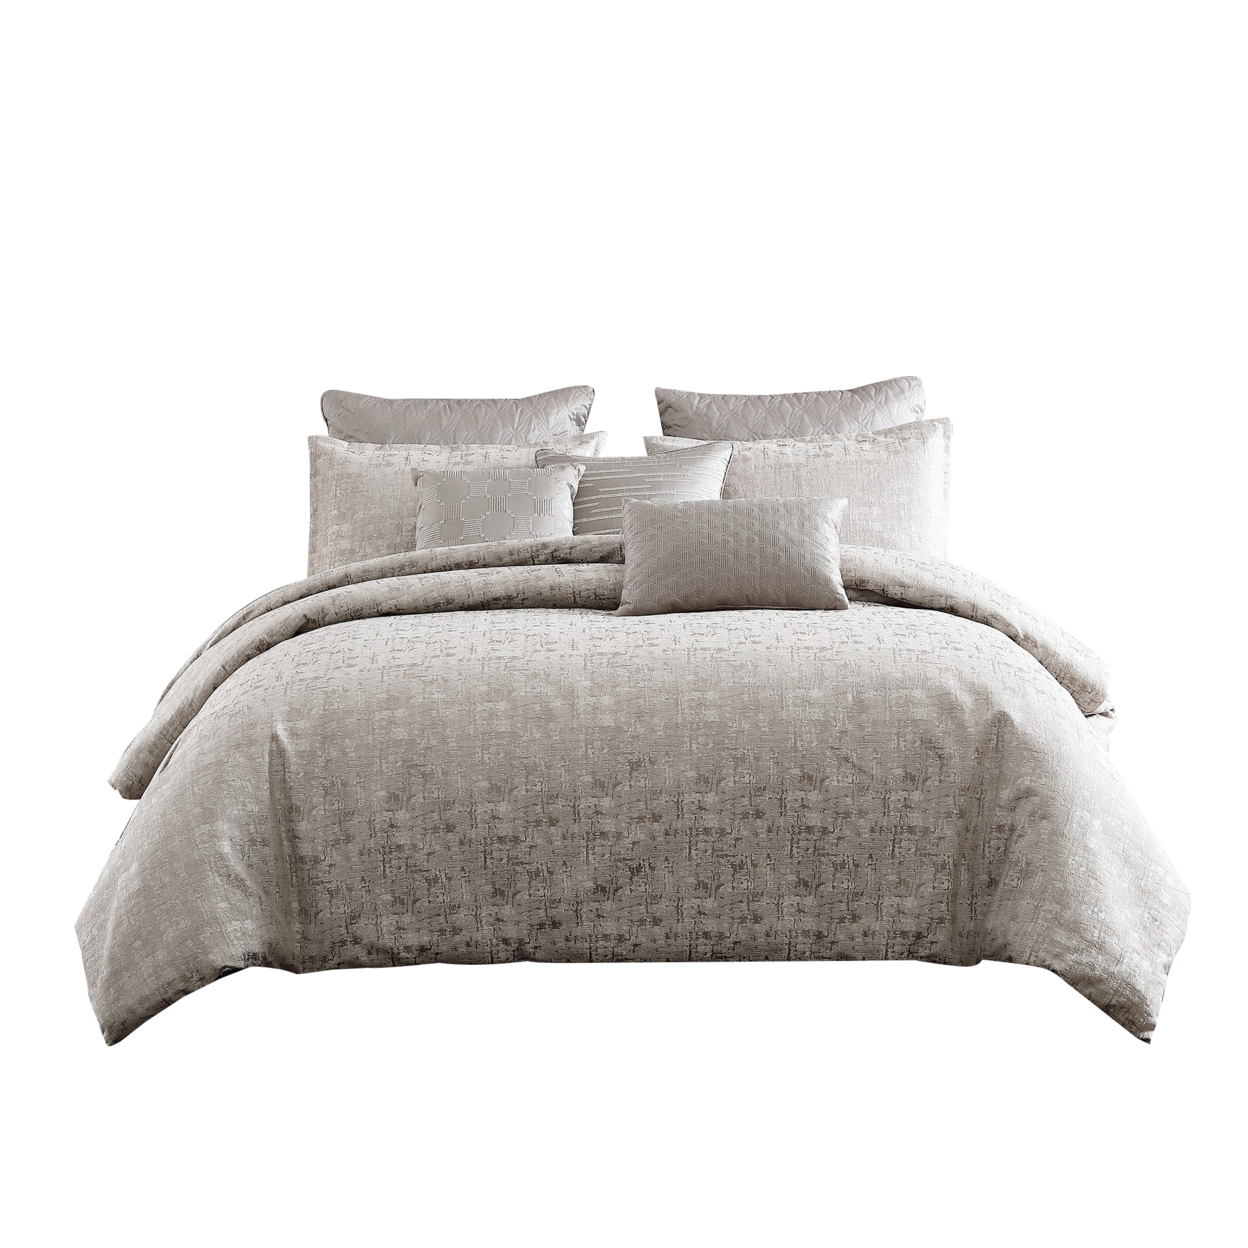 10 Piece King Polyester Comforter Set With Jacquard Print, Gray- Saltoro Sherpi